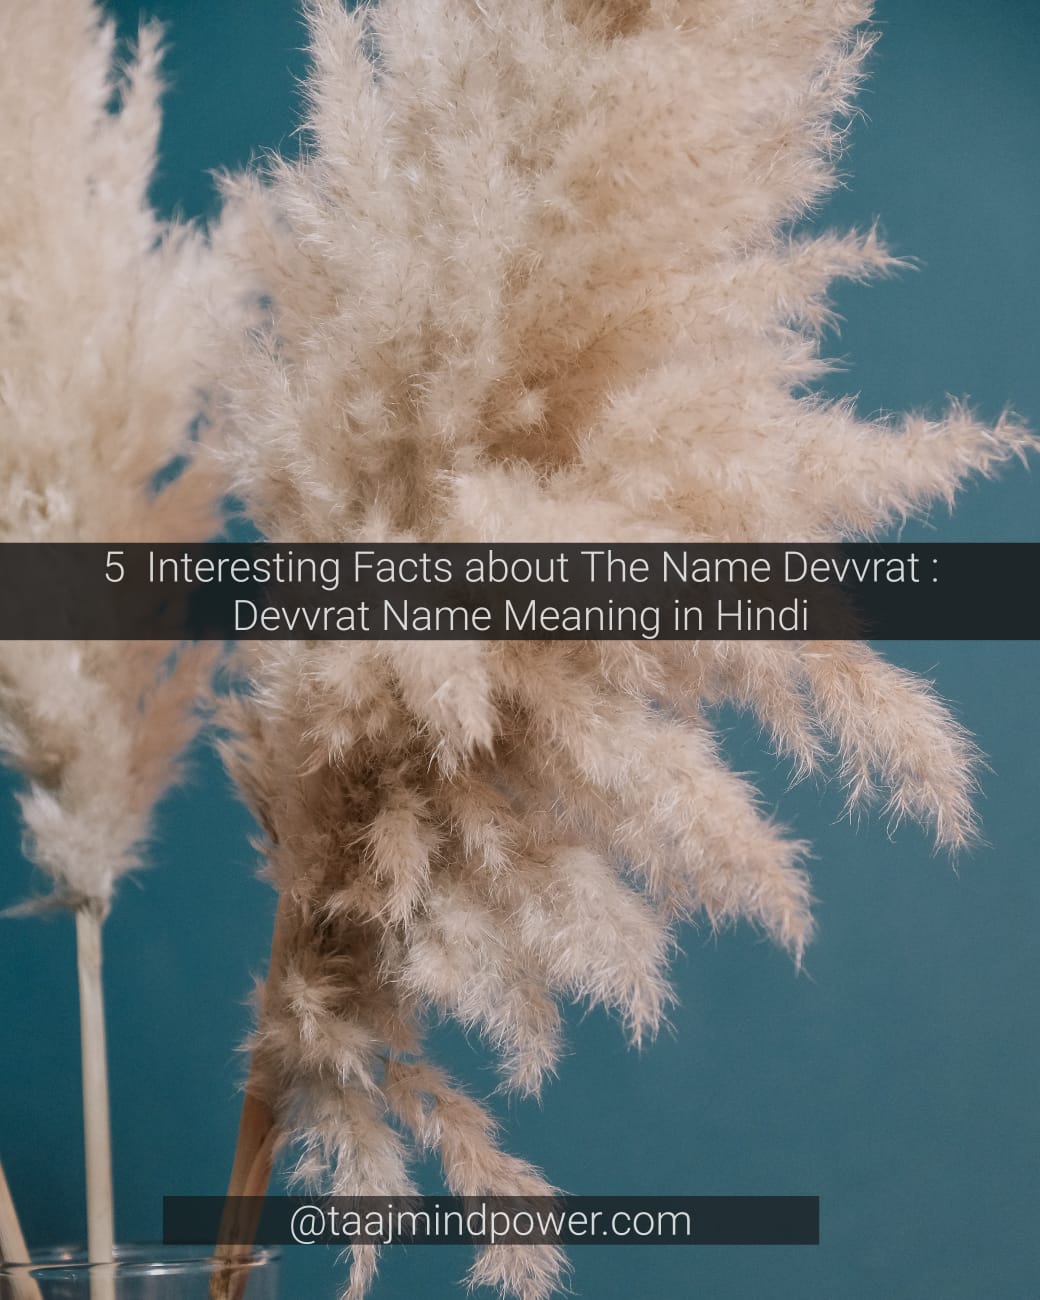 Devvrat Name Meaning in Hindi